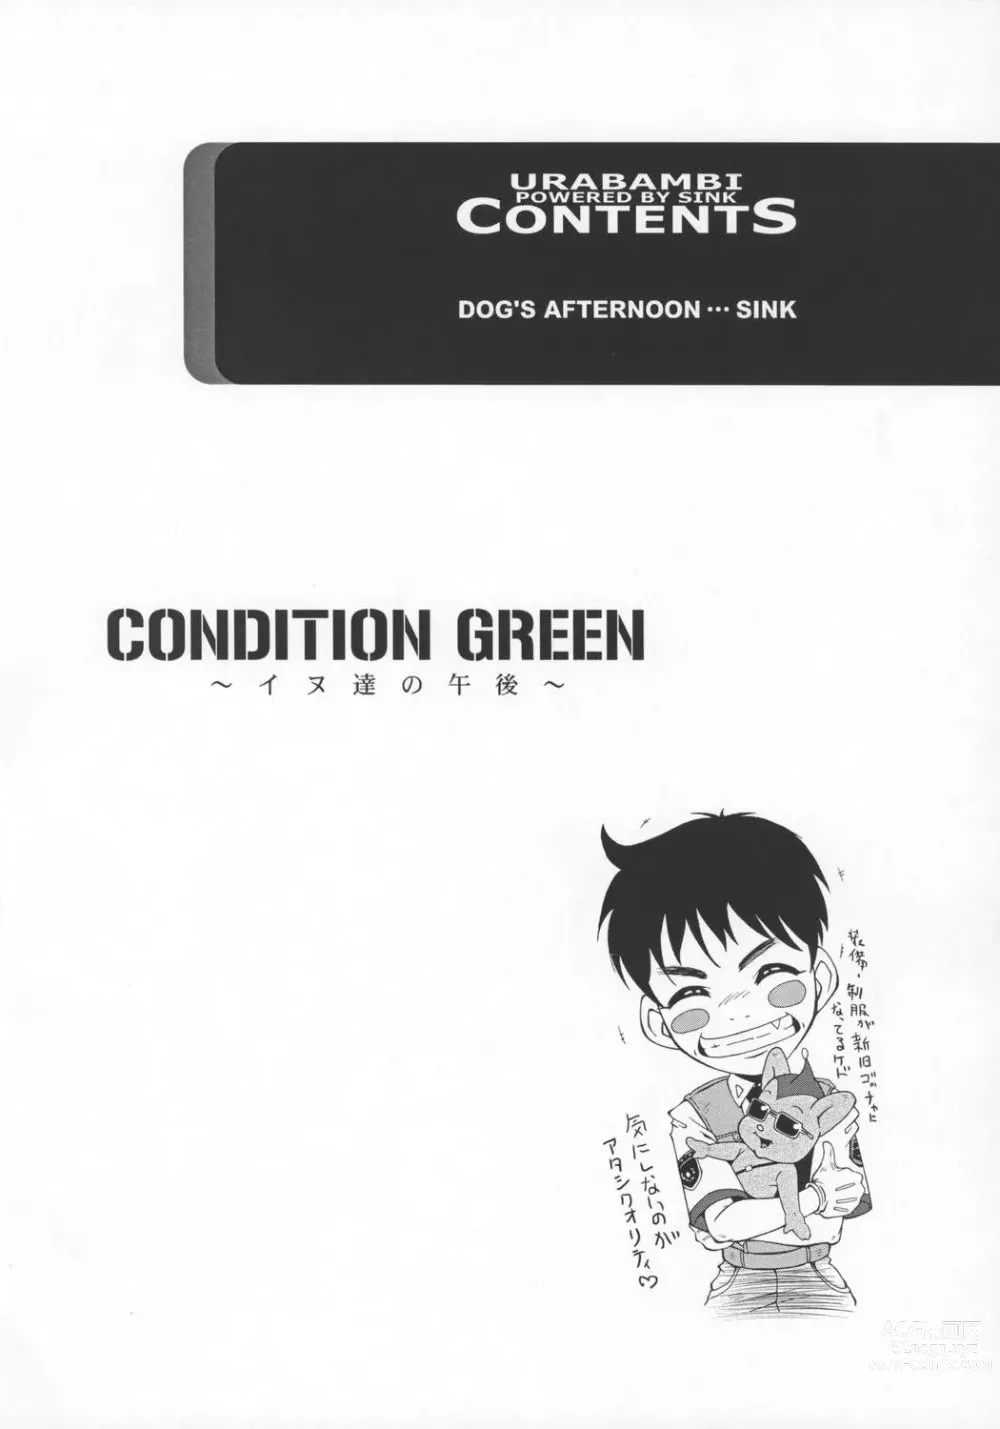 Page 3 of doujinshi Urabambi Vol. 29 - Condition Green